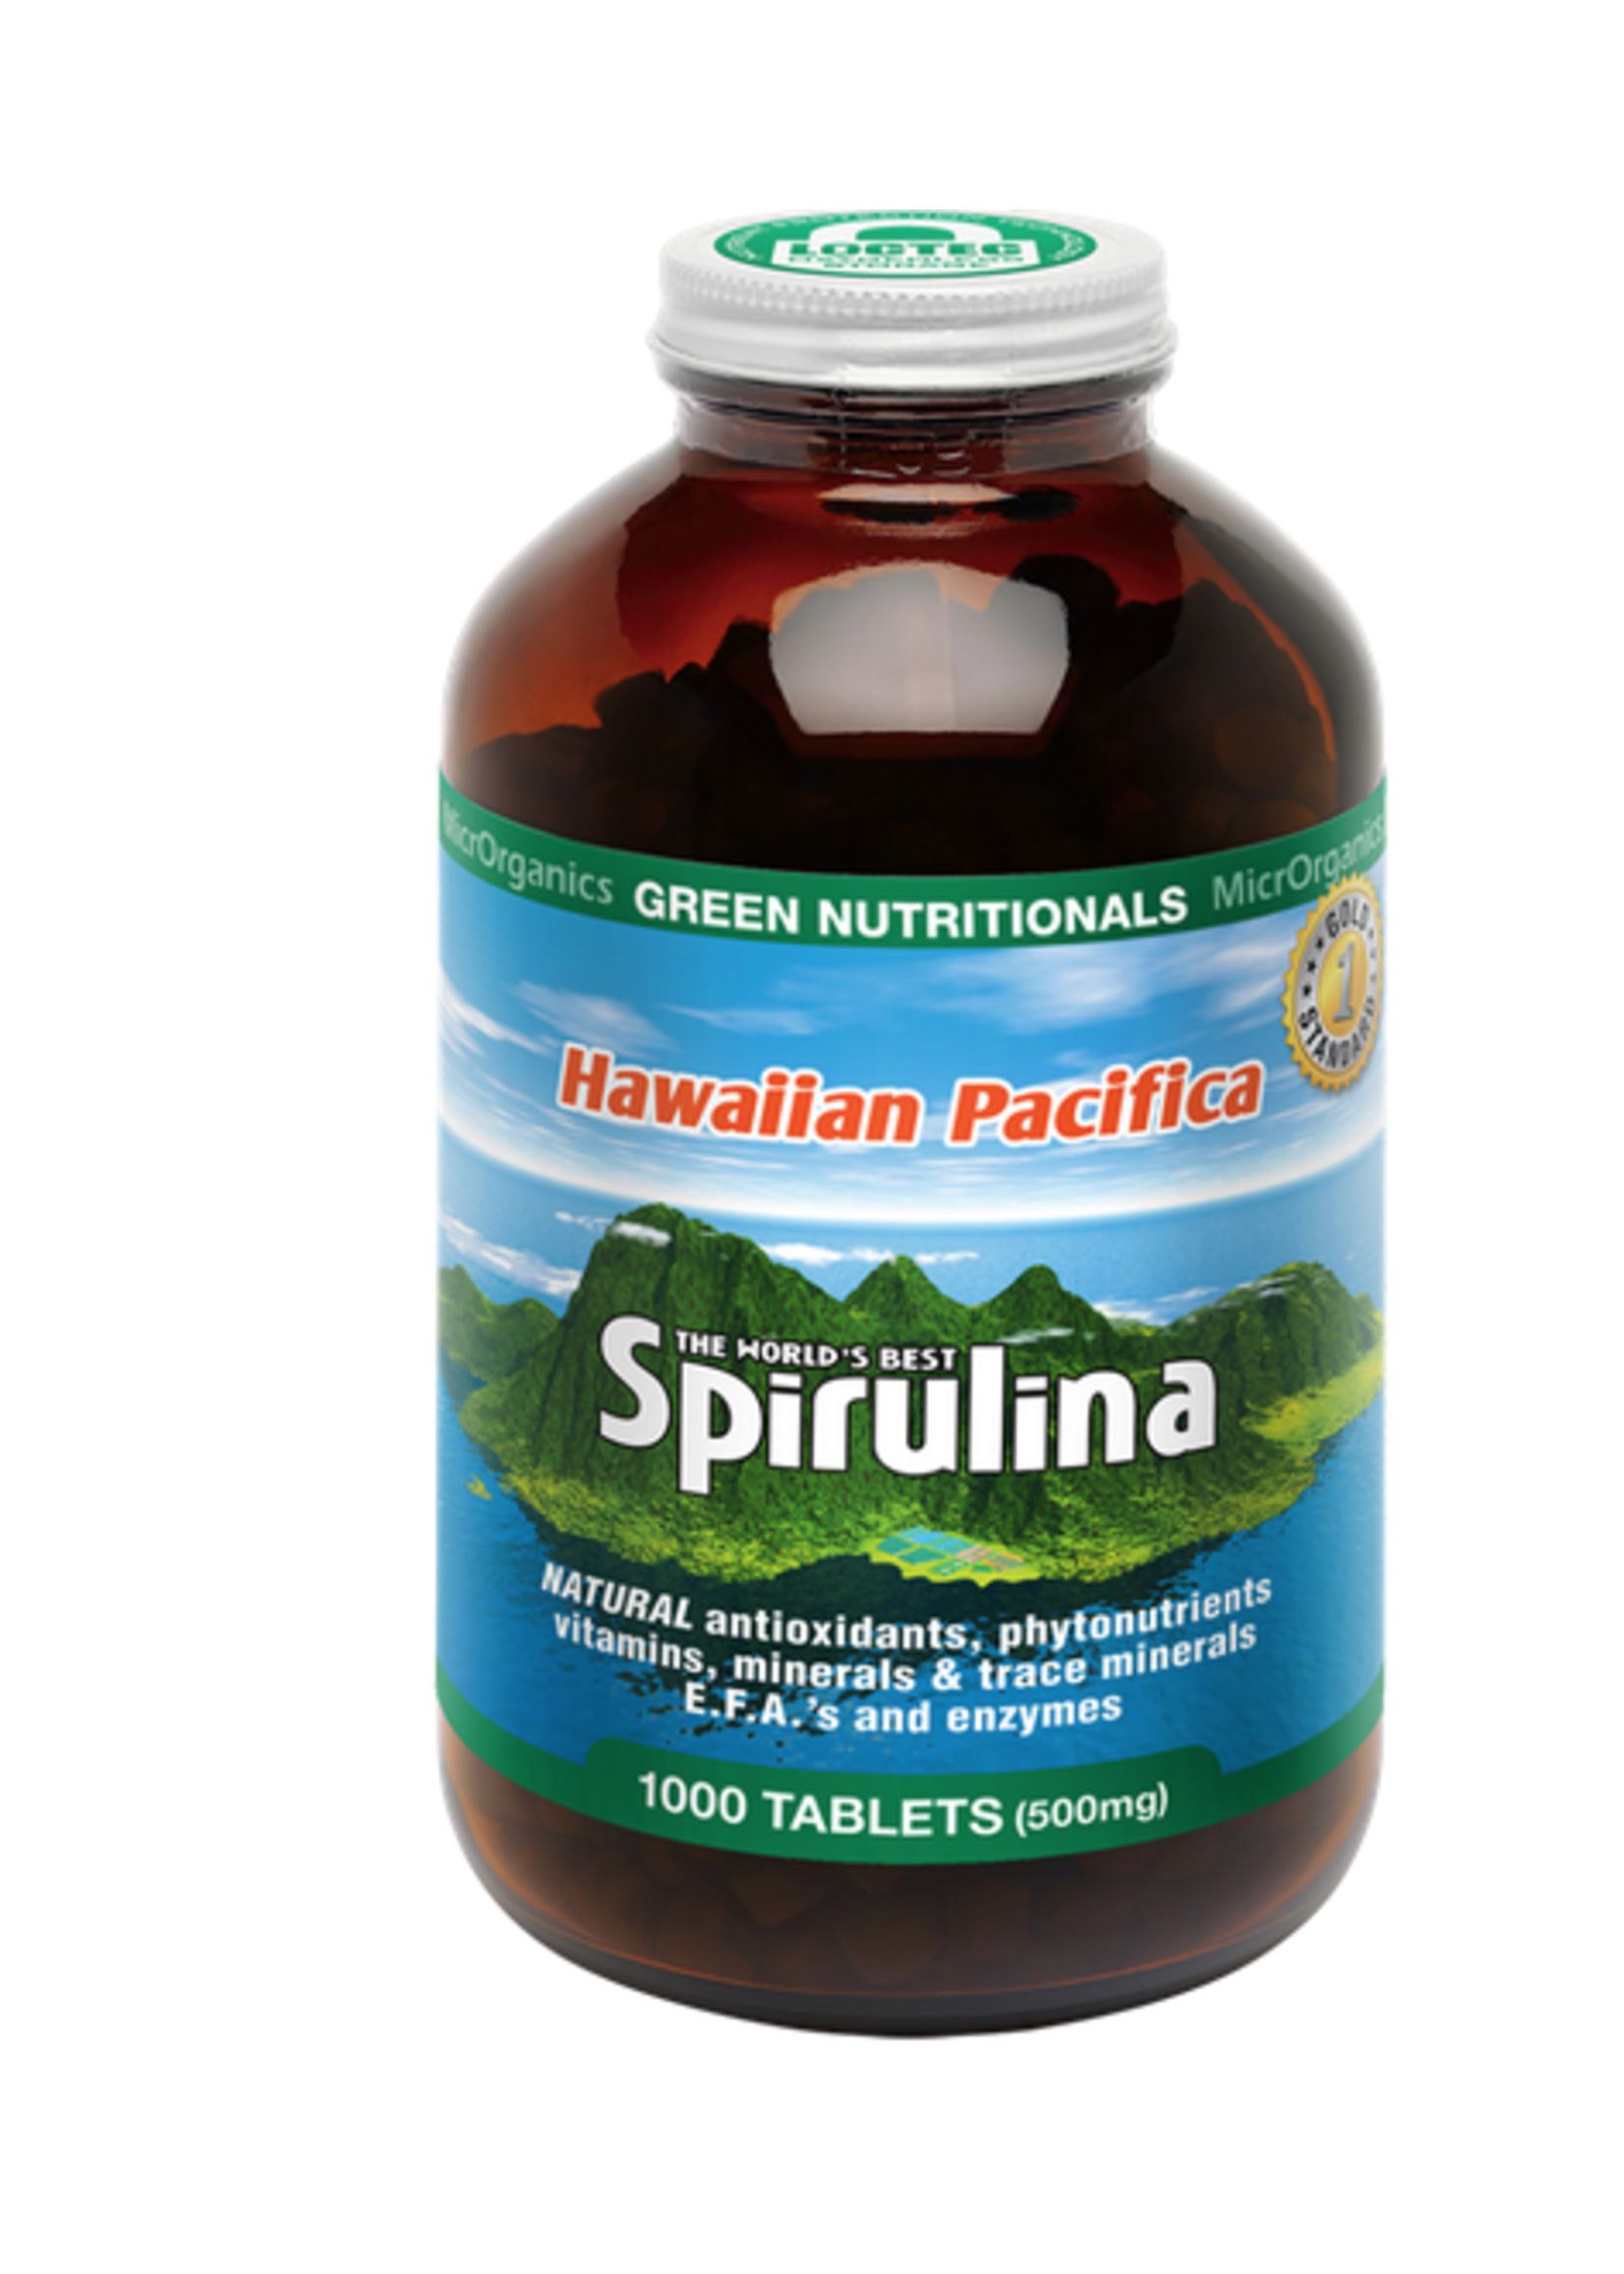 Green Nutritionals Green Nutritionals Organic Mountain Spirulina 500mg 1000t